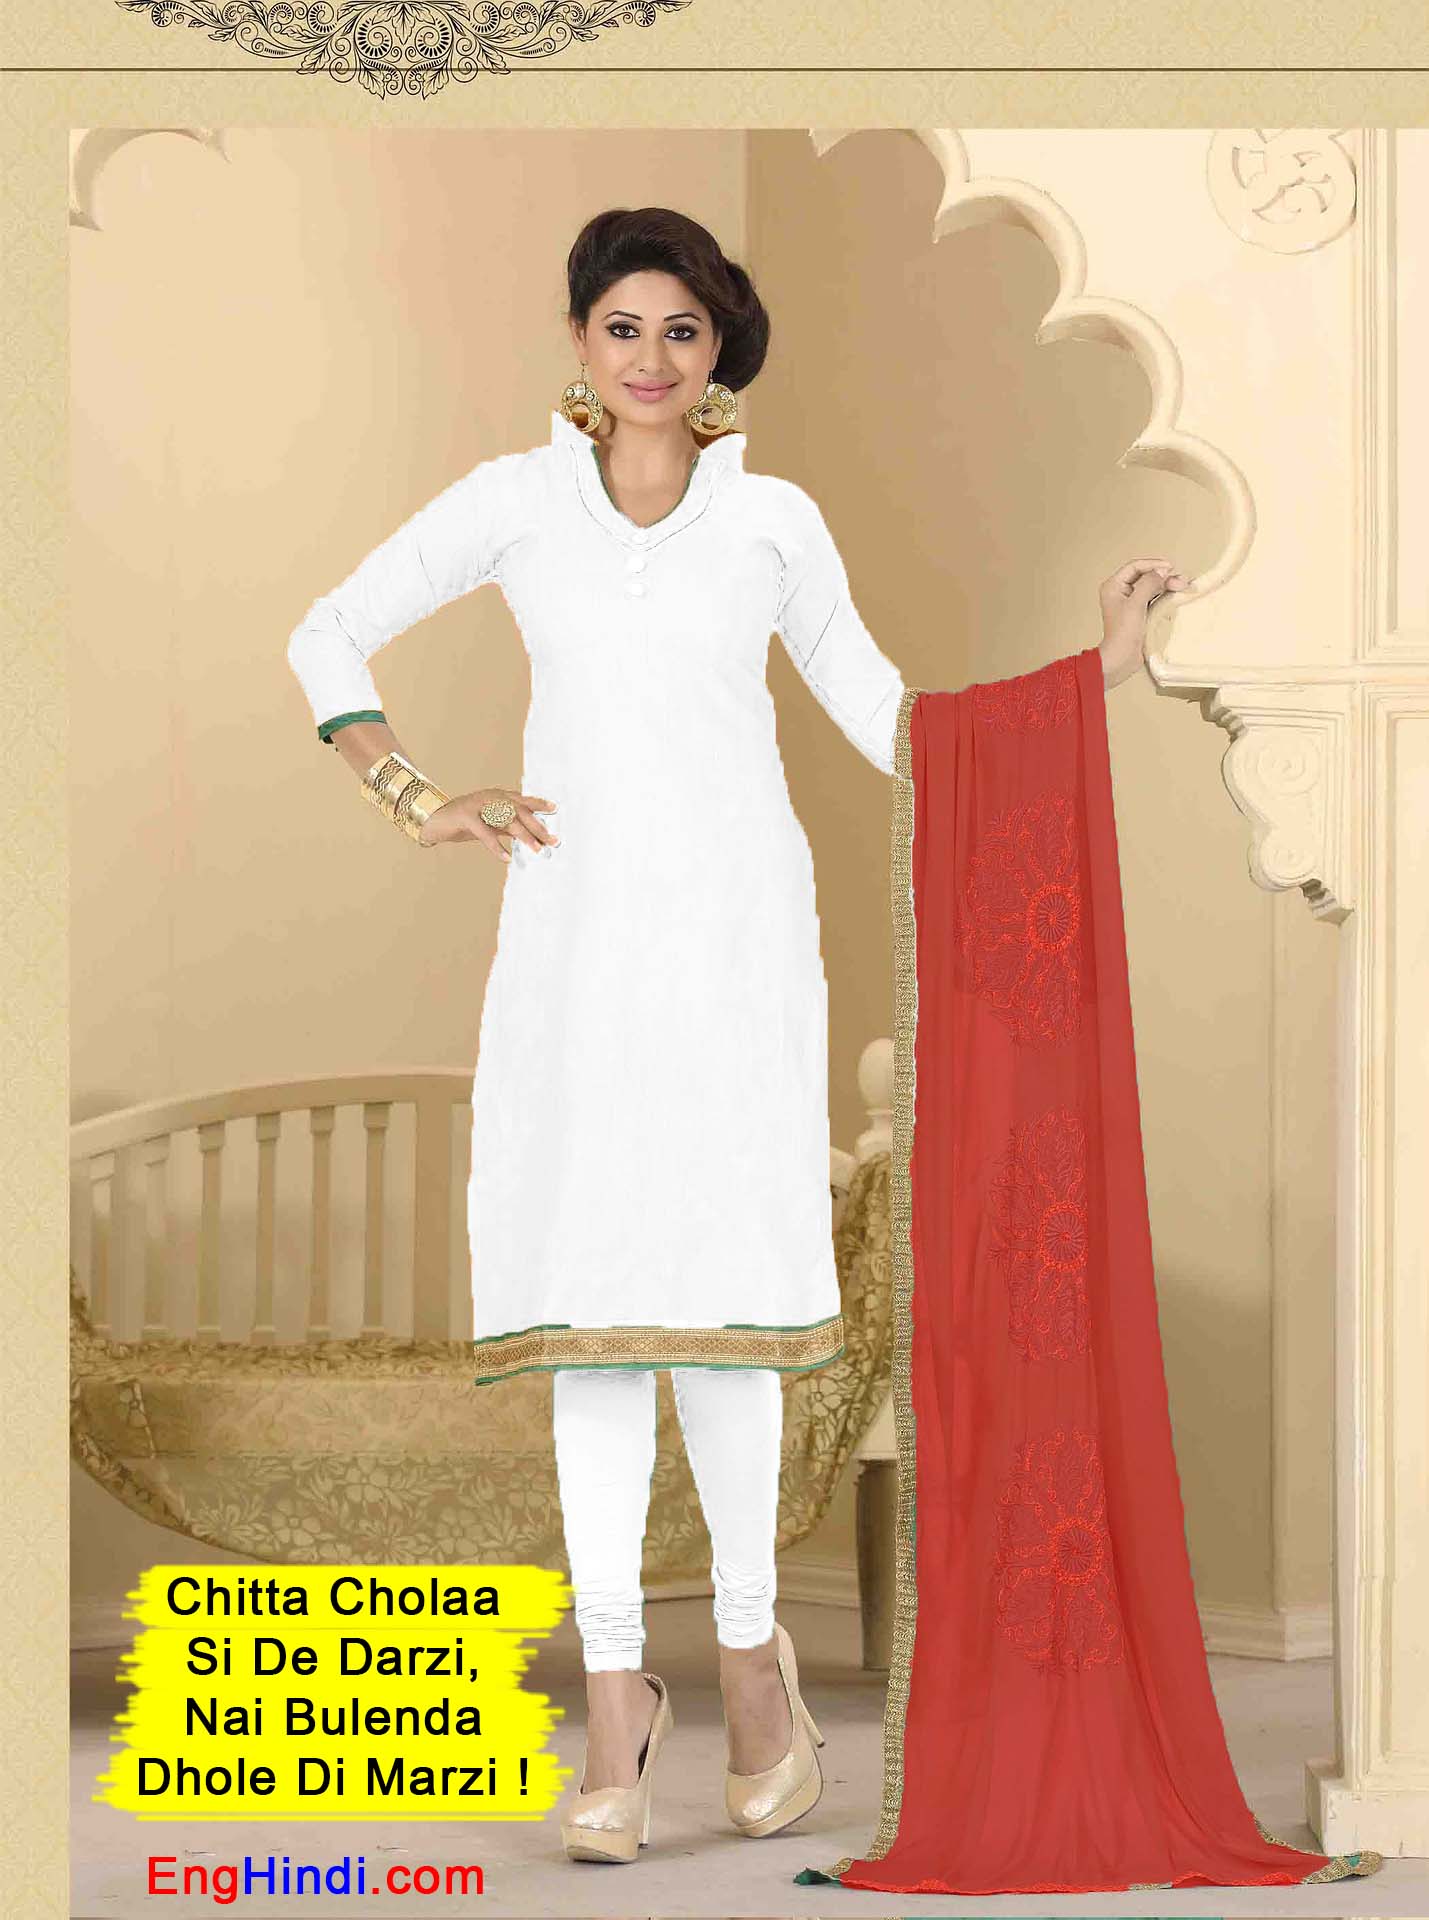 Chitta Chola Lyrics Meaning in Urdu, Hindi, English & Translation